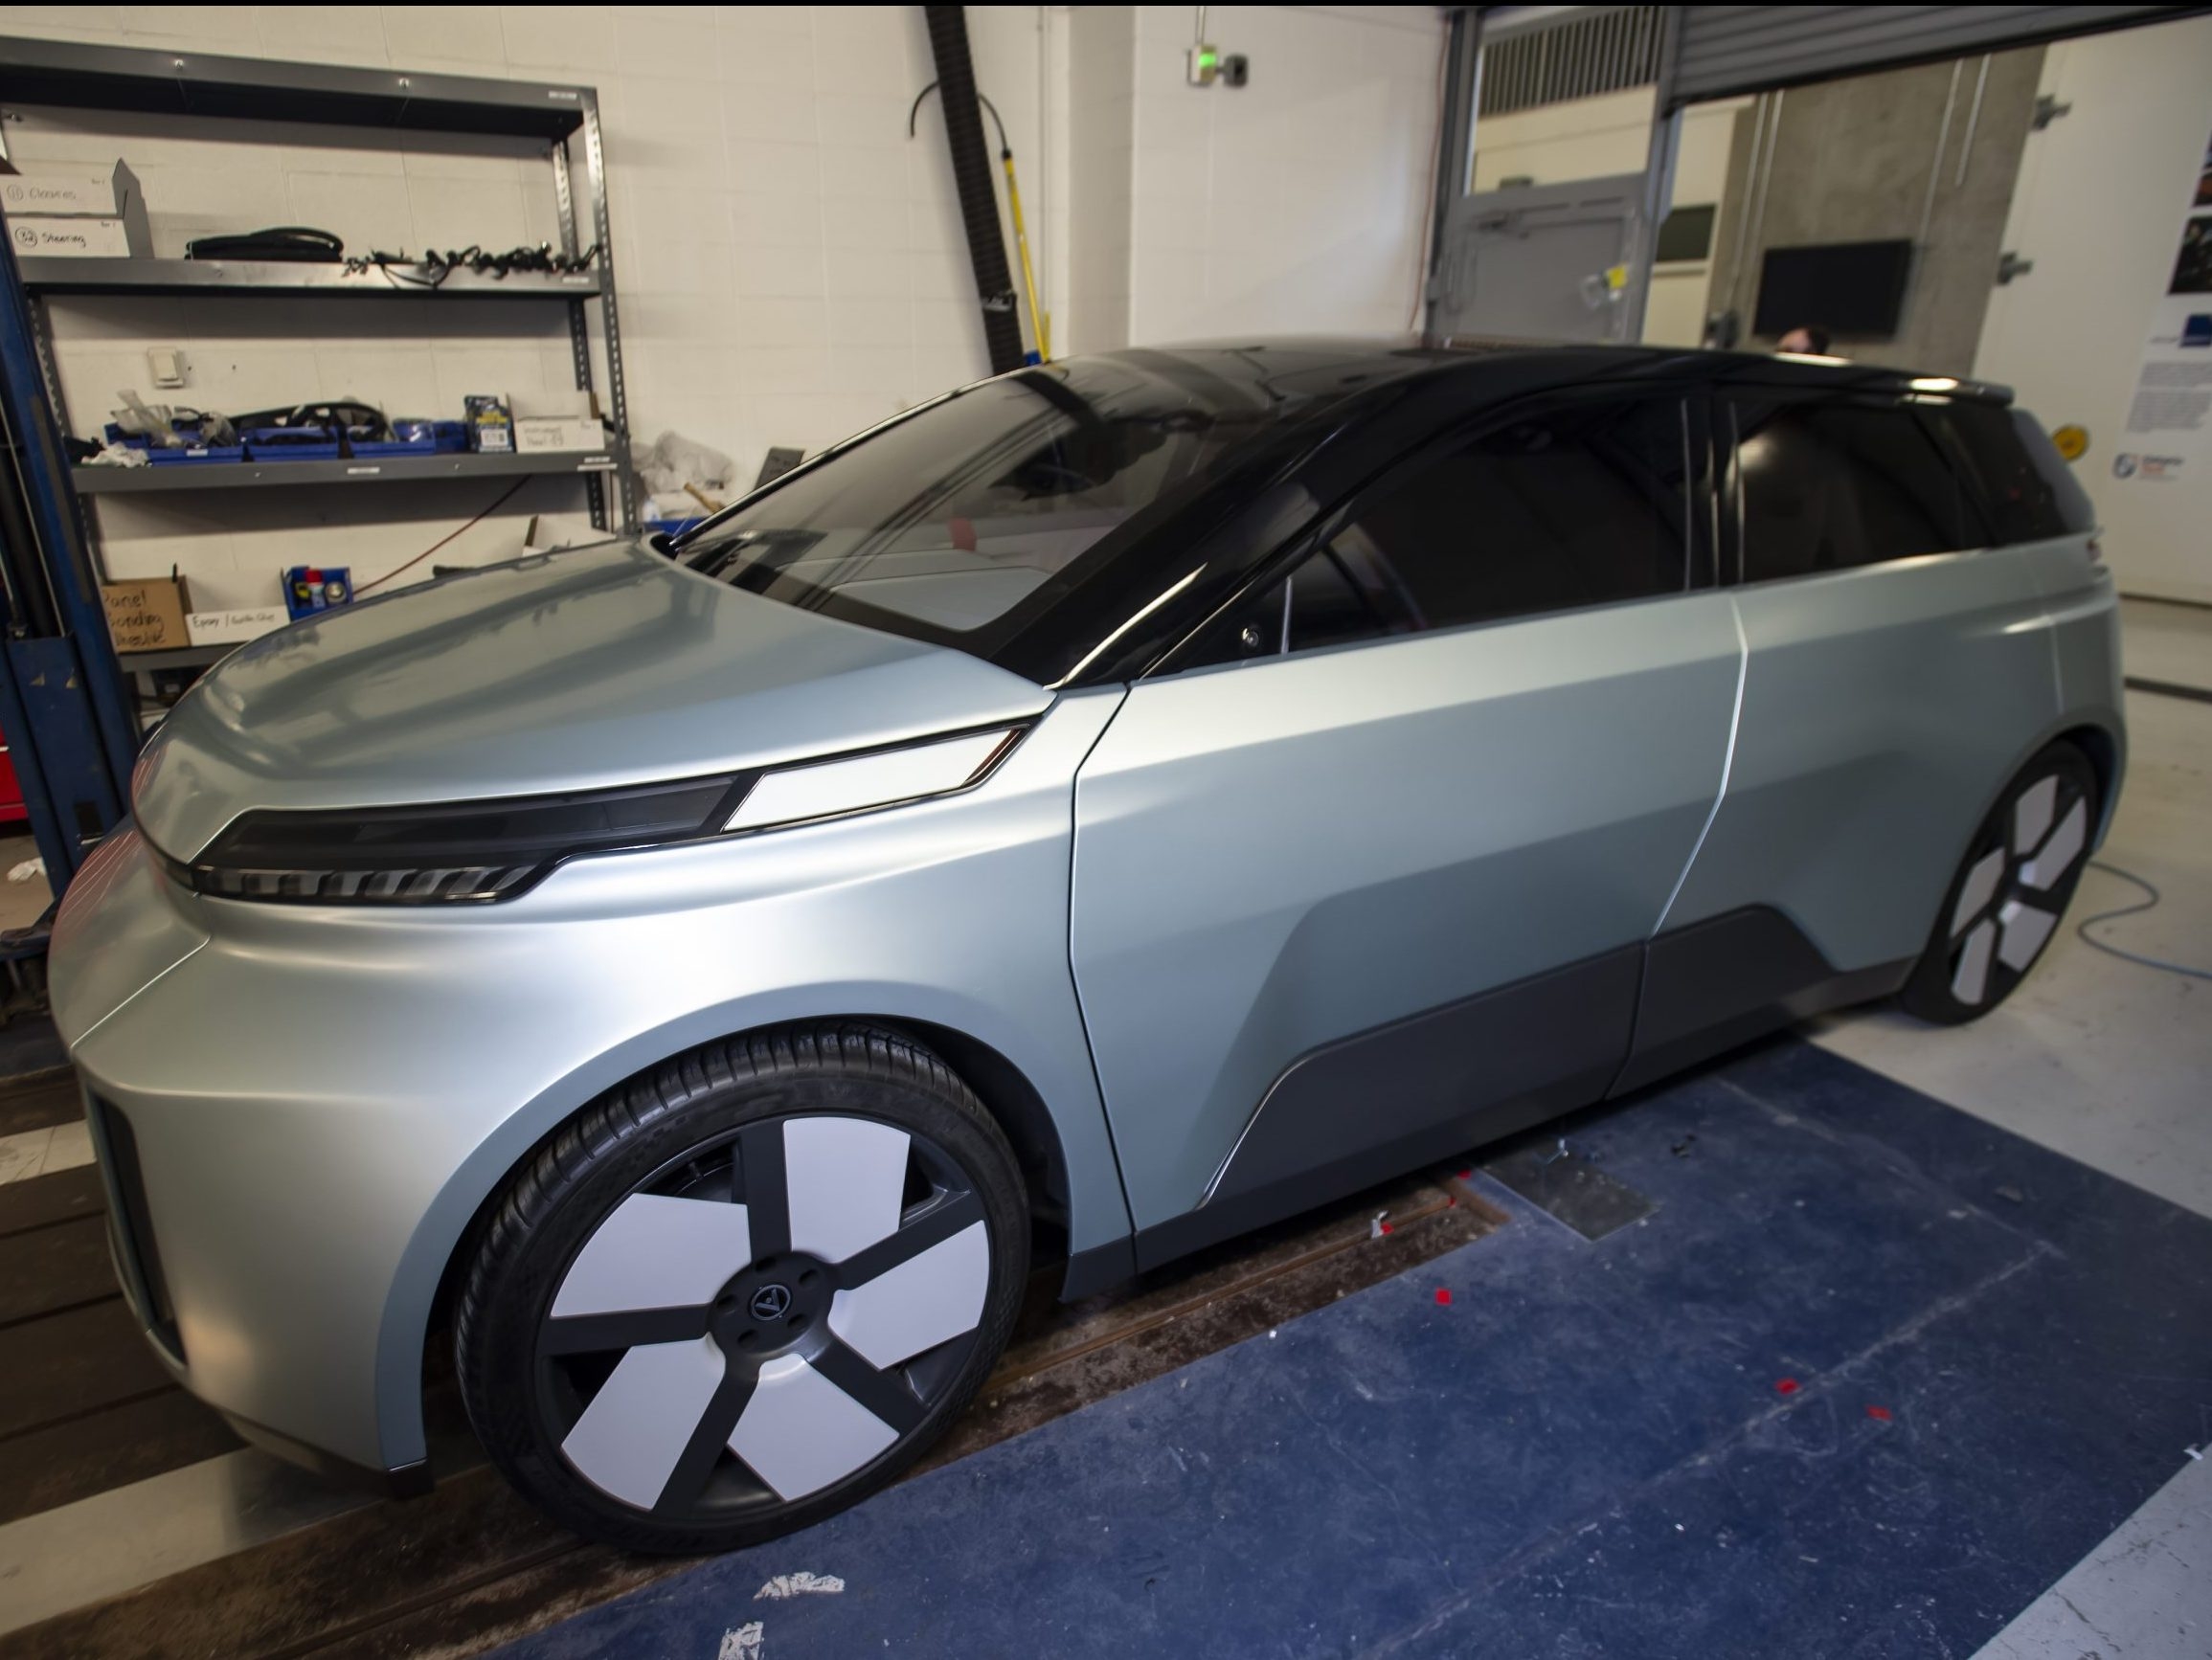 AllCanadian electric car gets global reveal at Vegas tech show